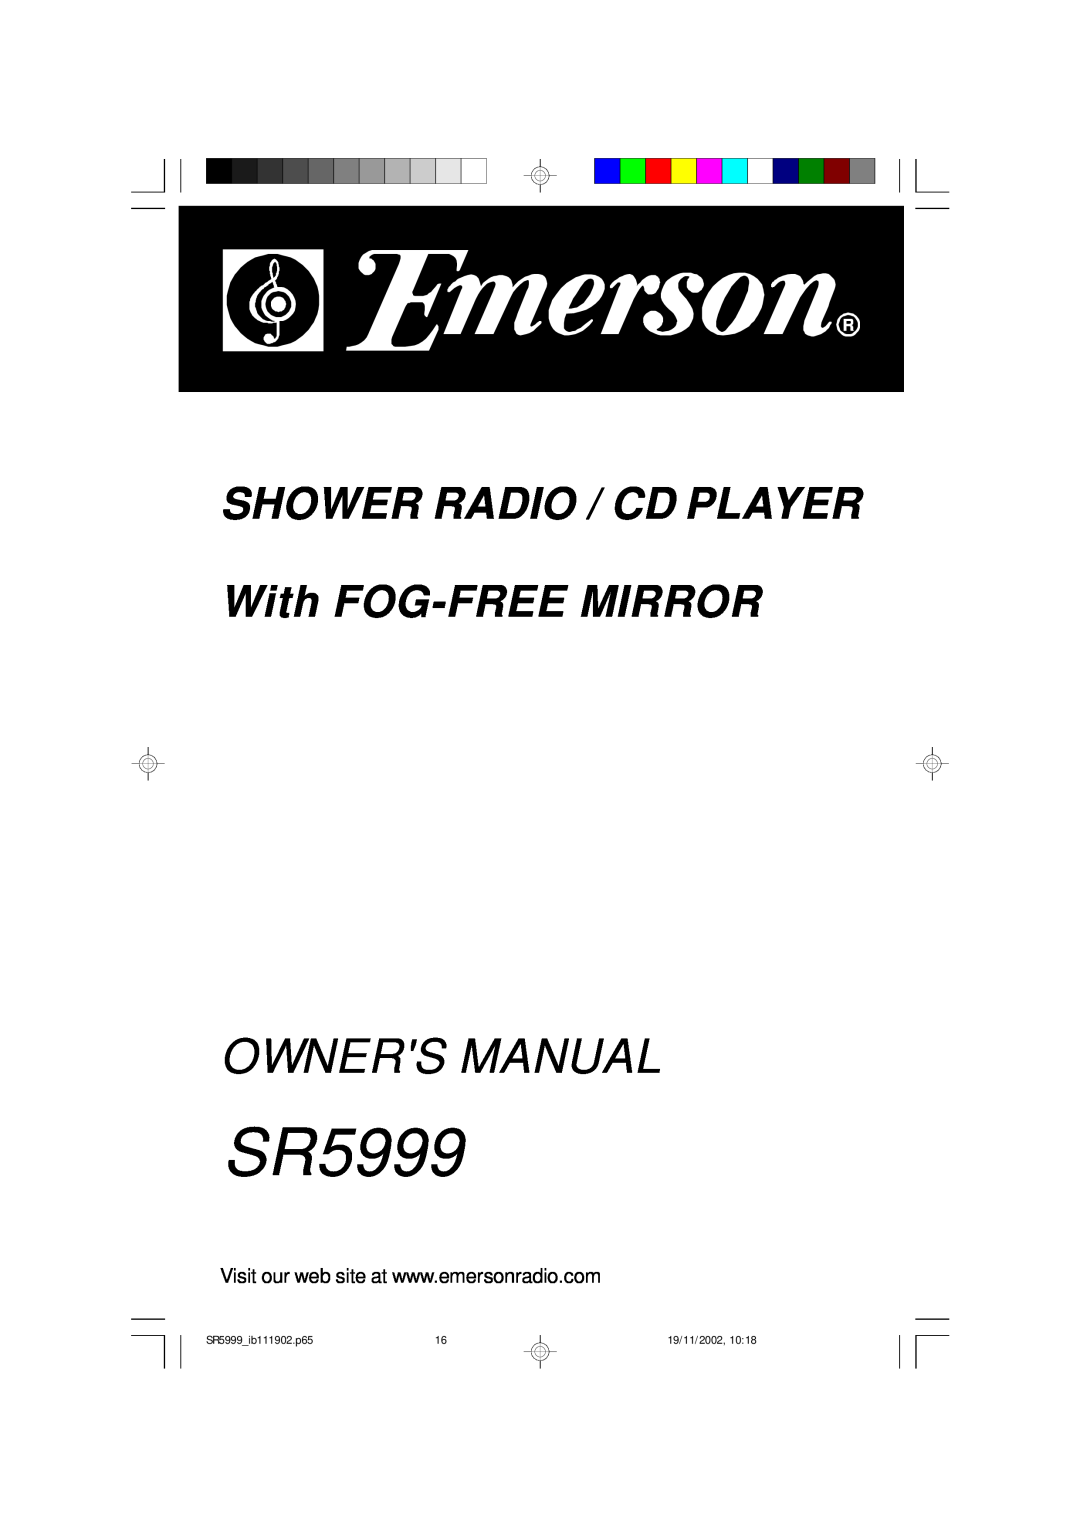 Emerson owner manual SHOWER RADIO / CD PLAYER With FOG-FREEMIRROR, SR5999 ib111902.p65, 19/11/2002 